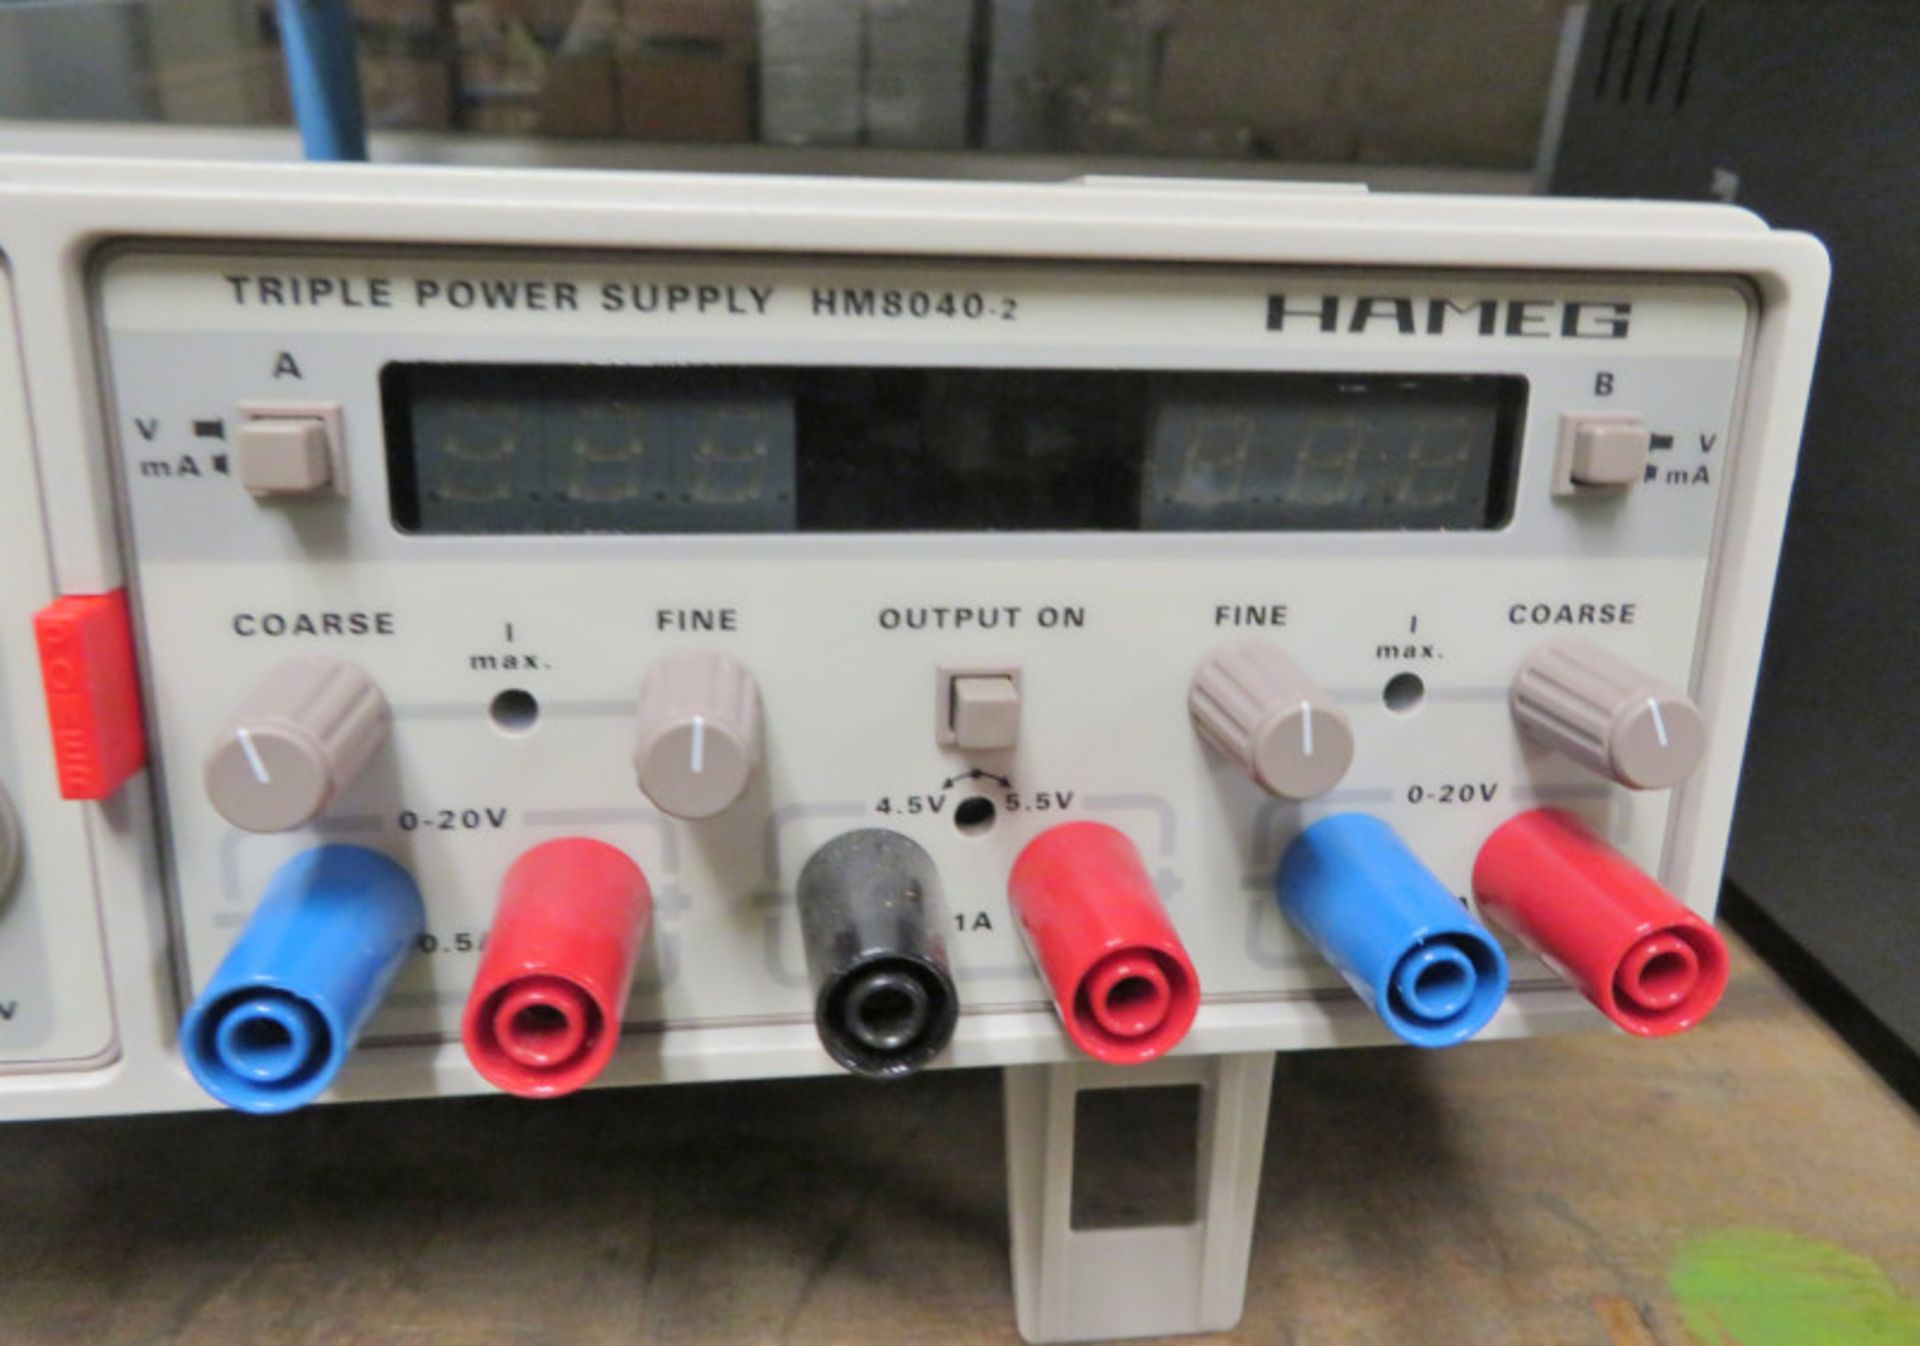 Hameg HM8014 Milliohm Meter & HM8040-2 Triple Power Supply (No Power Cable) - Image 3 of 4